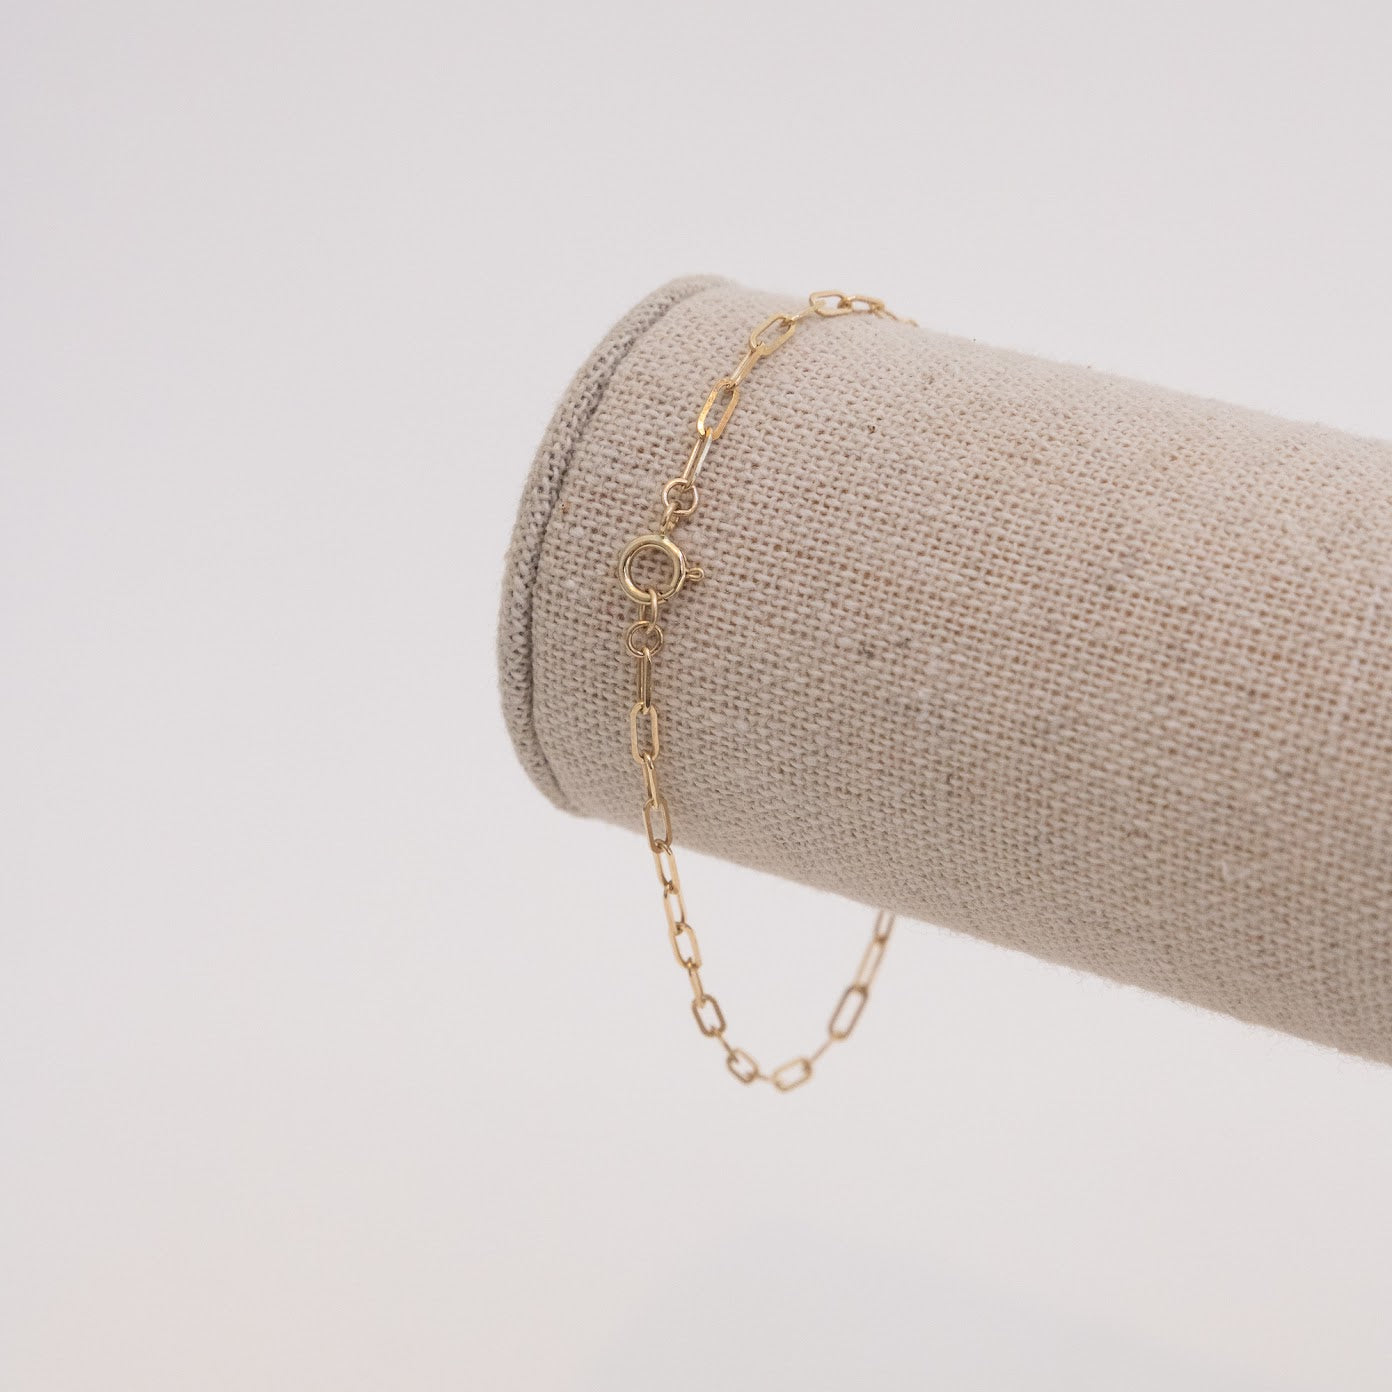 10K Paperclip Chain Bracelet/Anklet